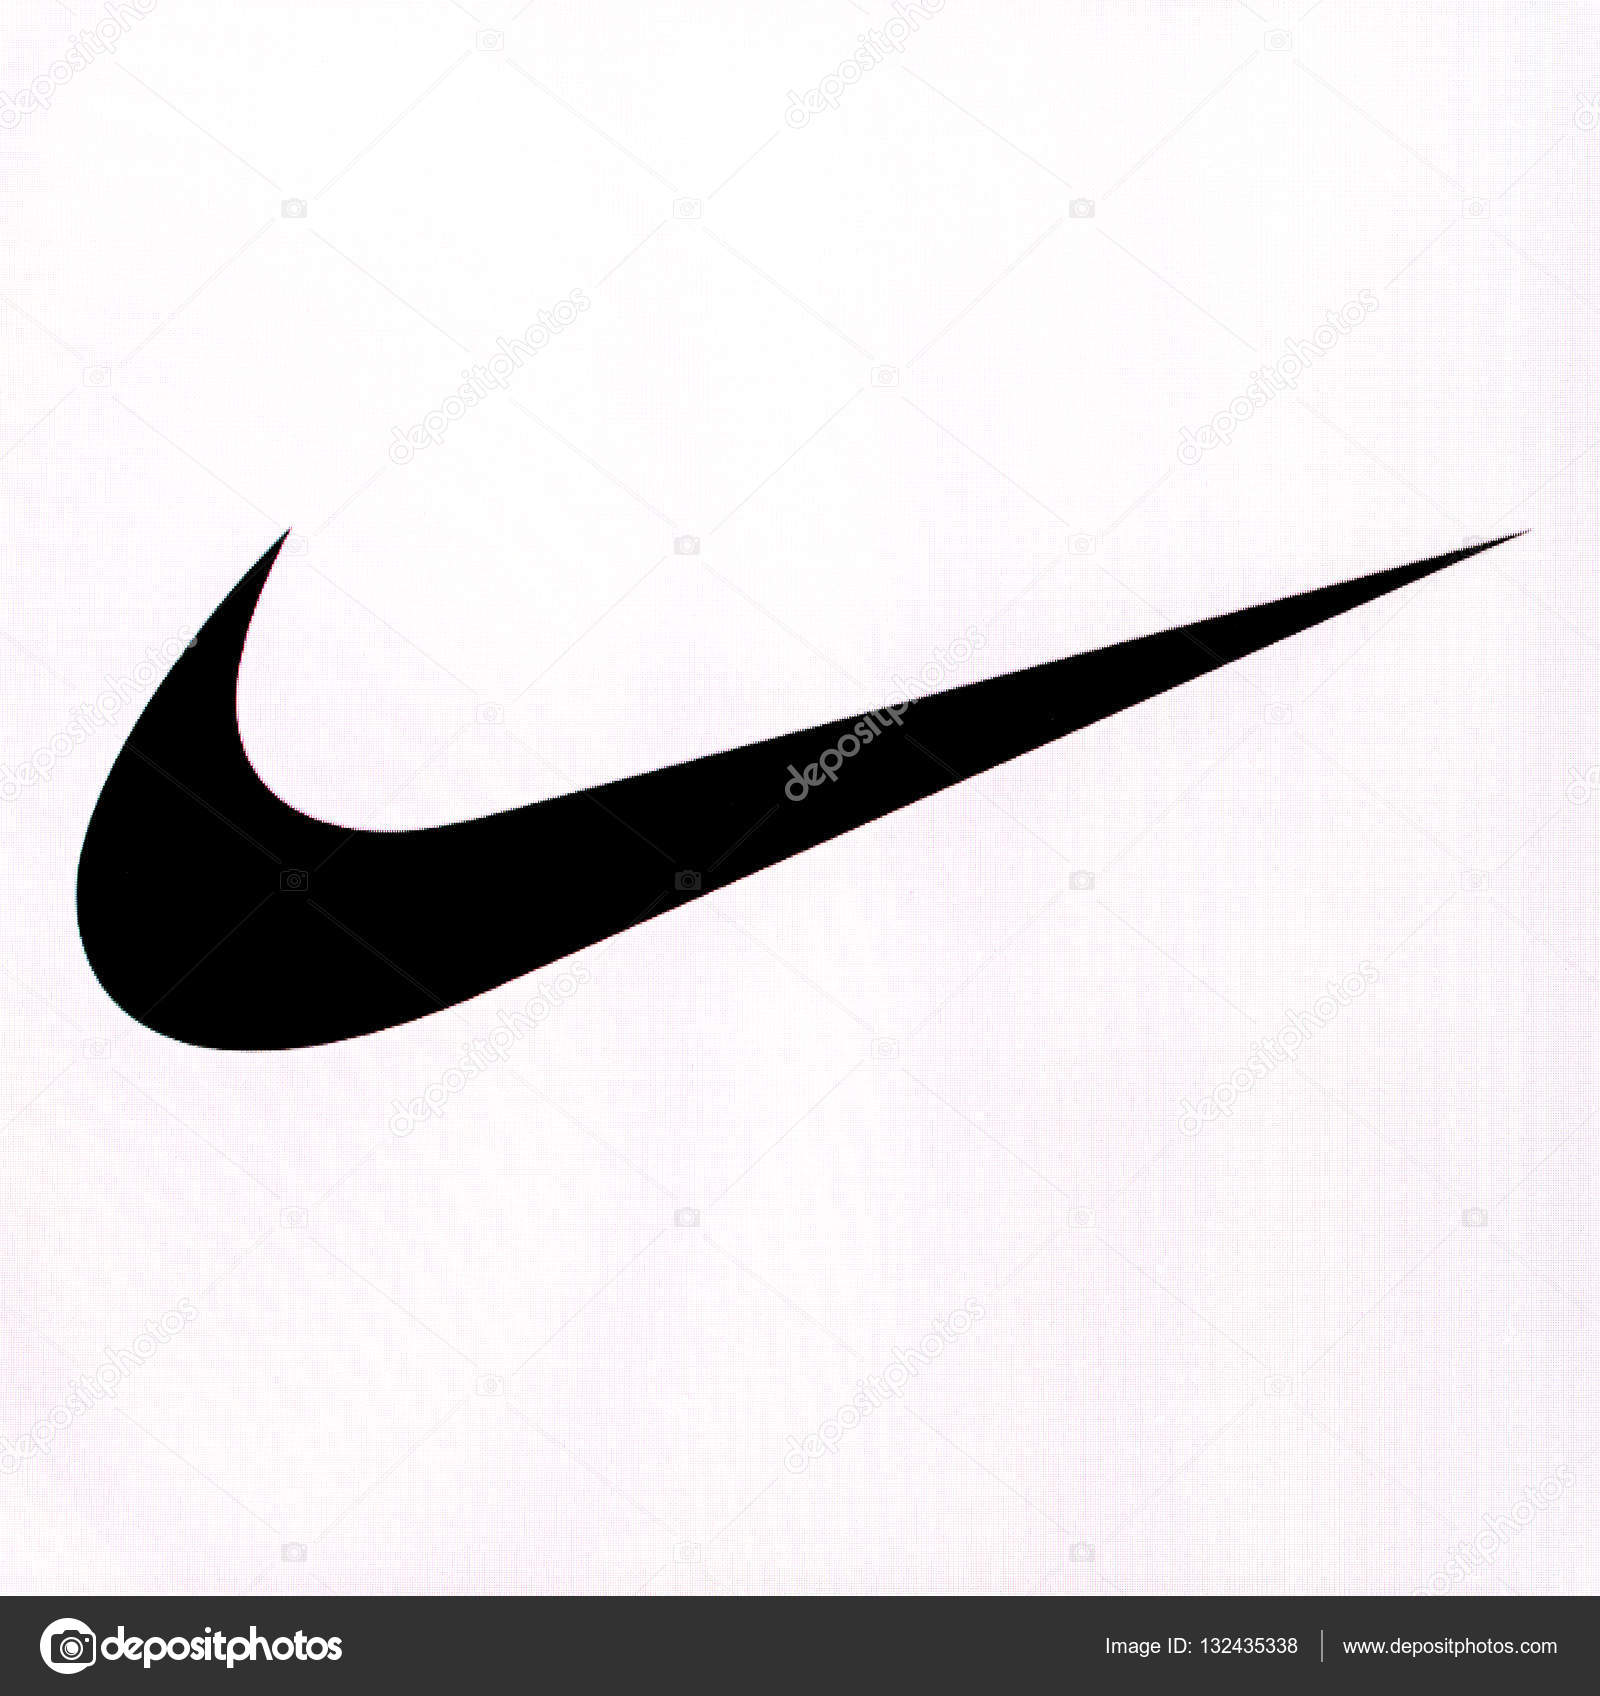 Logo of the brand Nike – Stock Editorial Photo © kornienkoalex #132435338